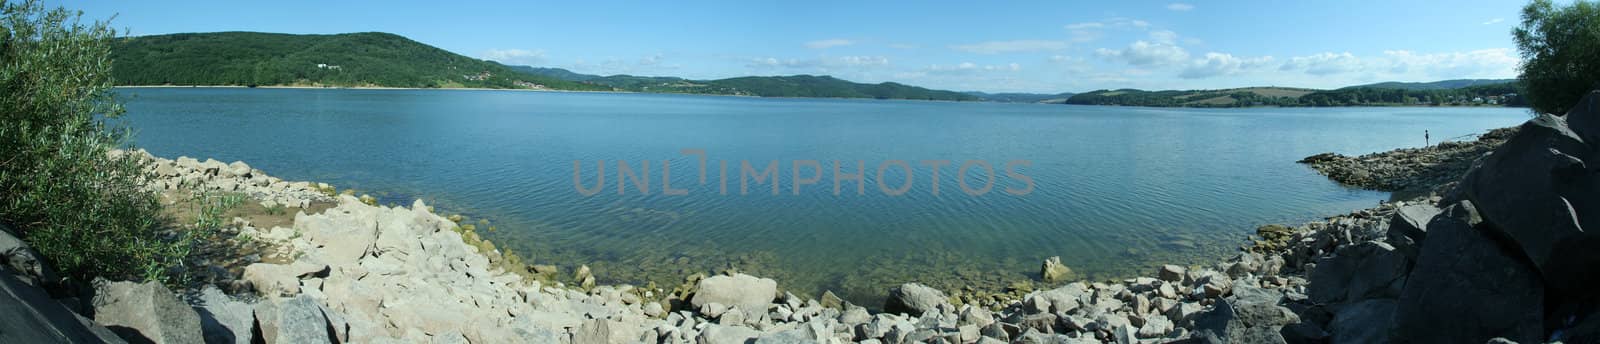 blue lake panorama, fisherman silhouette on right side, photo taken at Domasa, Slovakia